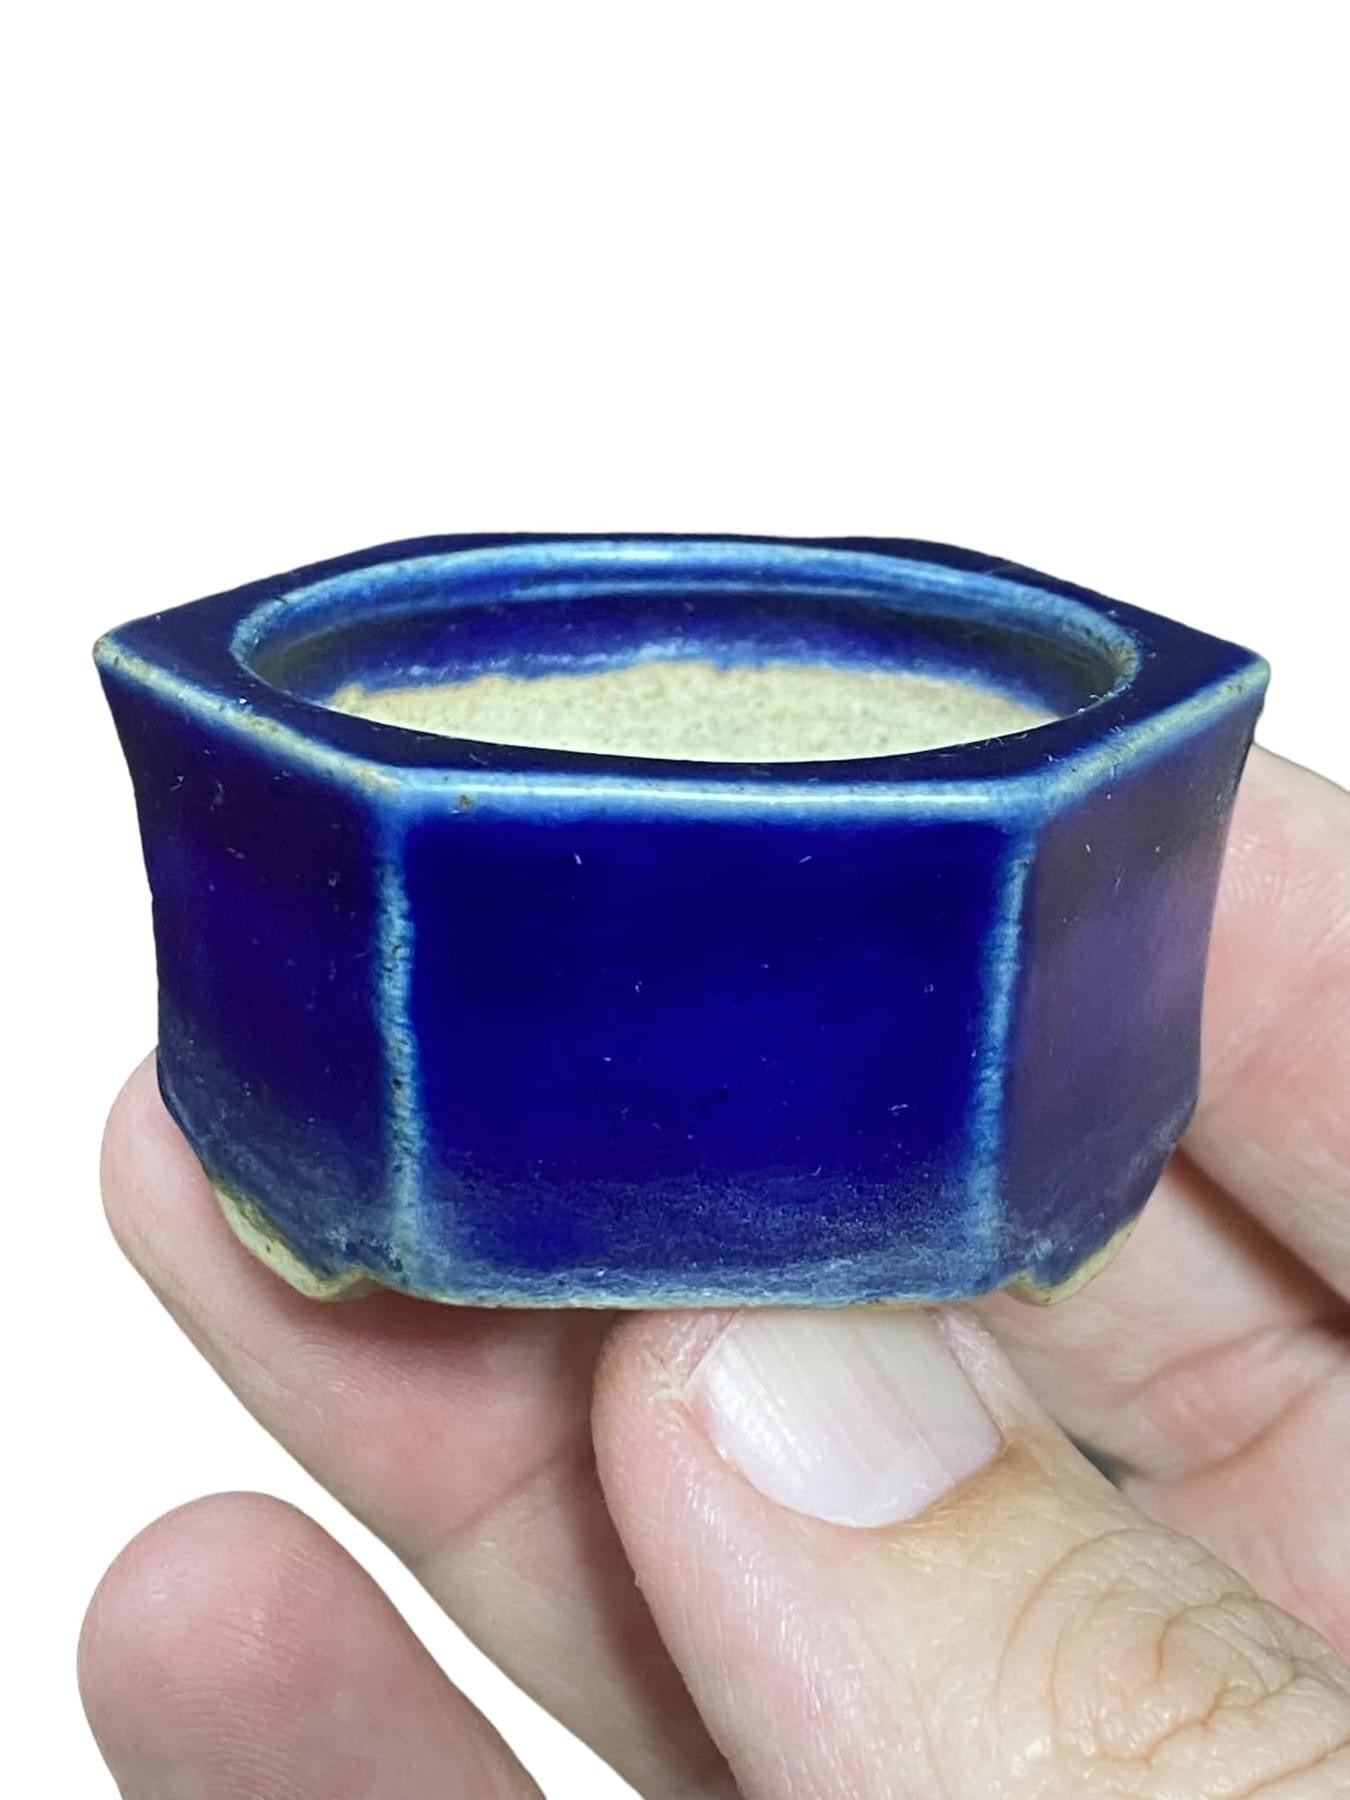 Japanese - Beautiful Blue Glazed Bonsai Pot from Japan (Discounted)